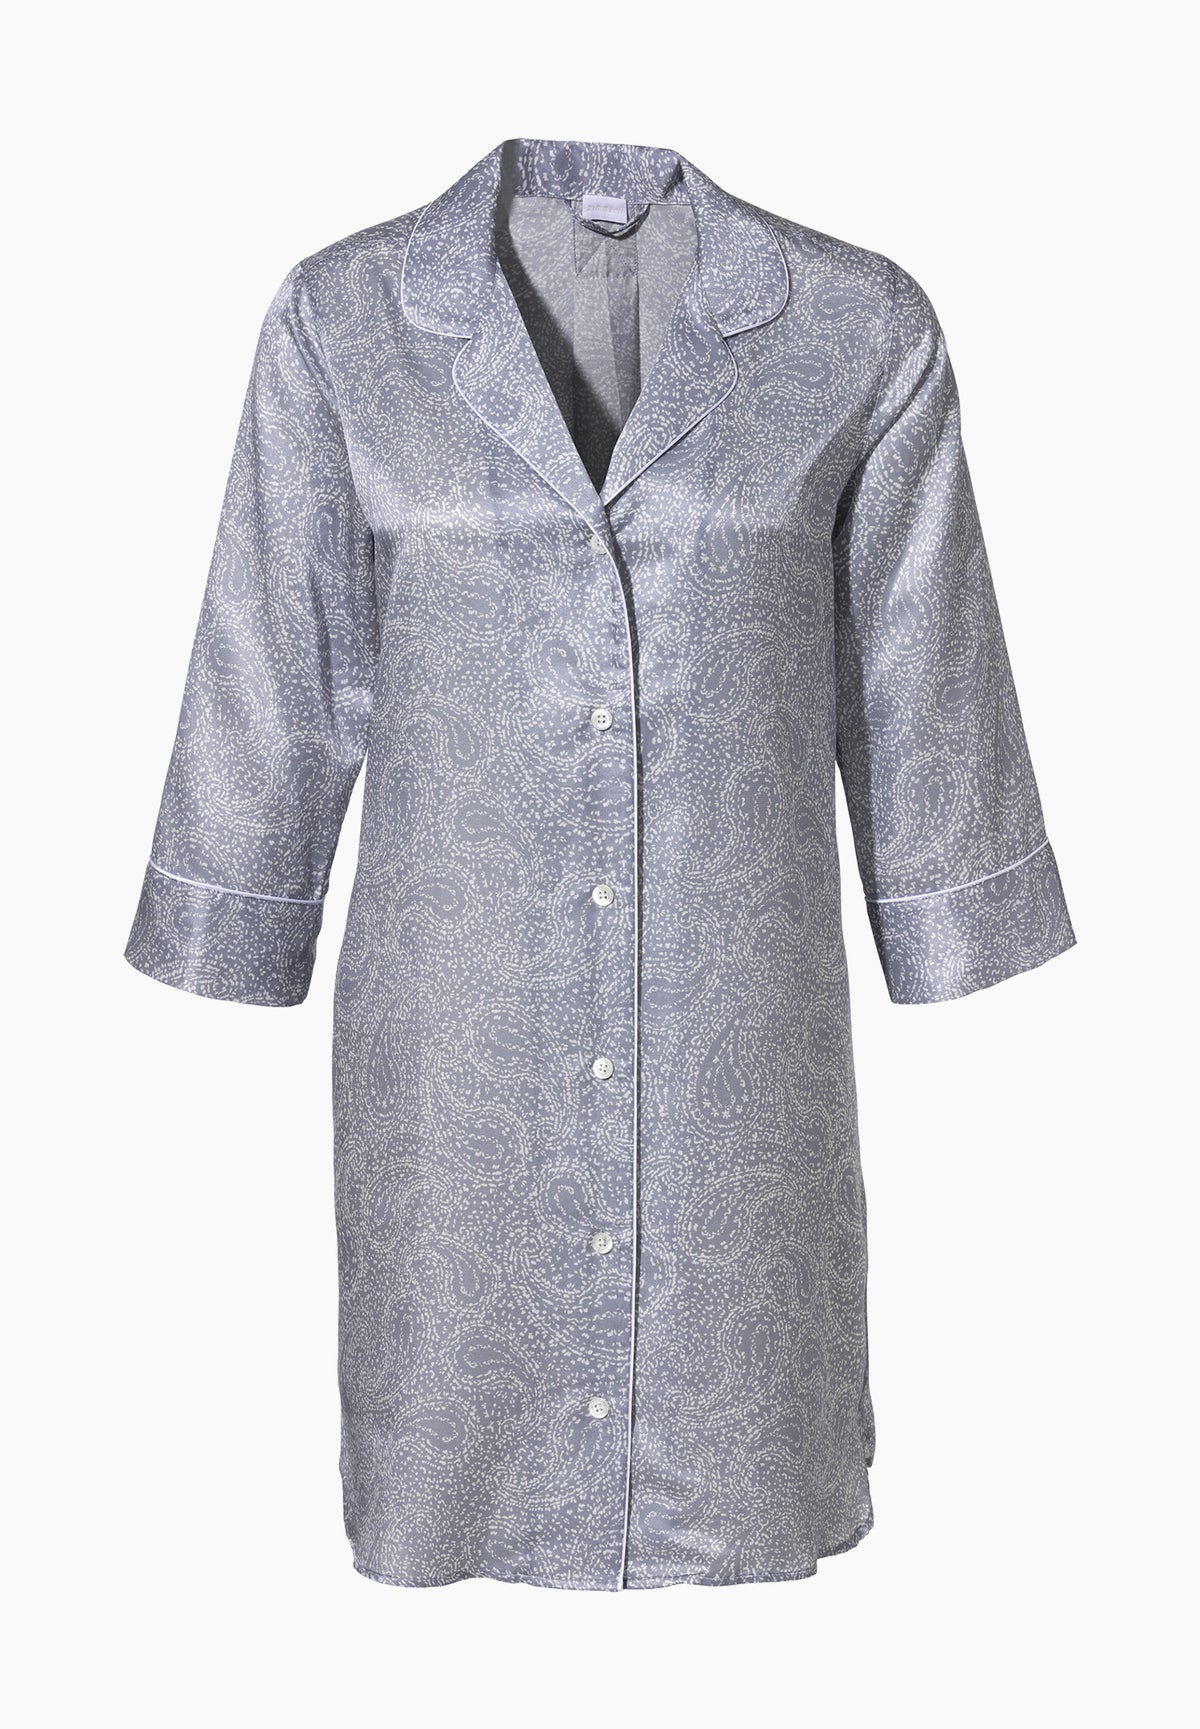 Cotton/Silk Print | Sleepshirt 3/4 Sleeve - paisley blue